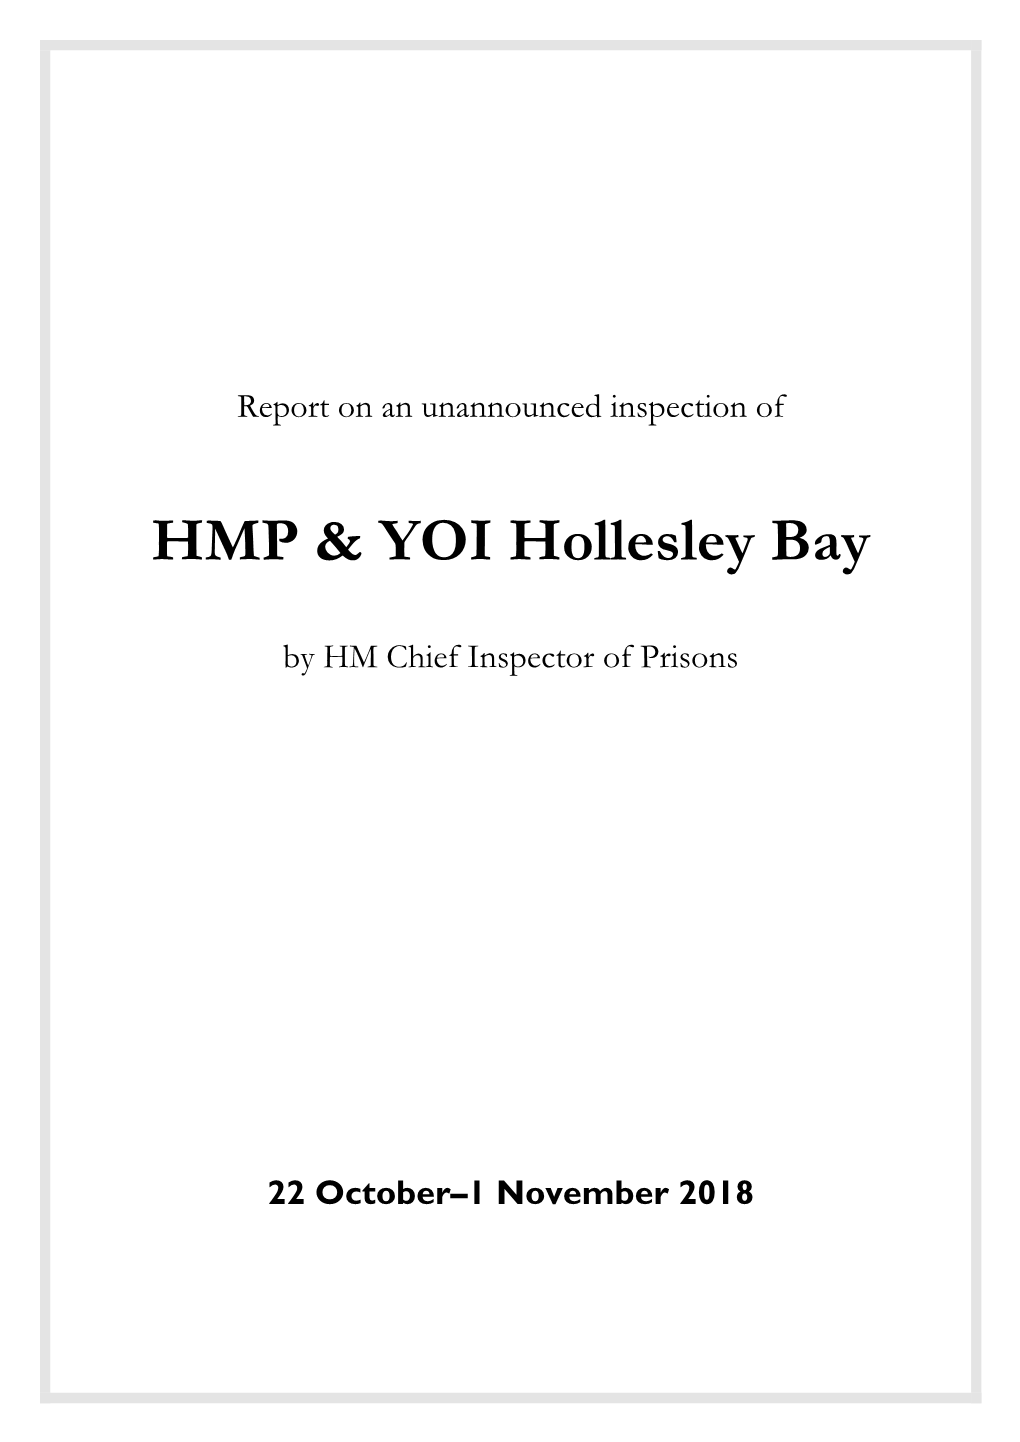 HMP & YOI Hollesley